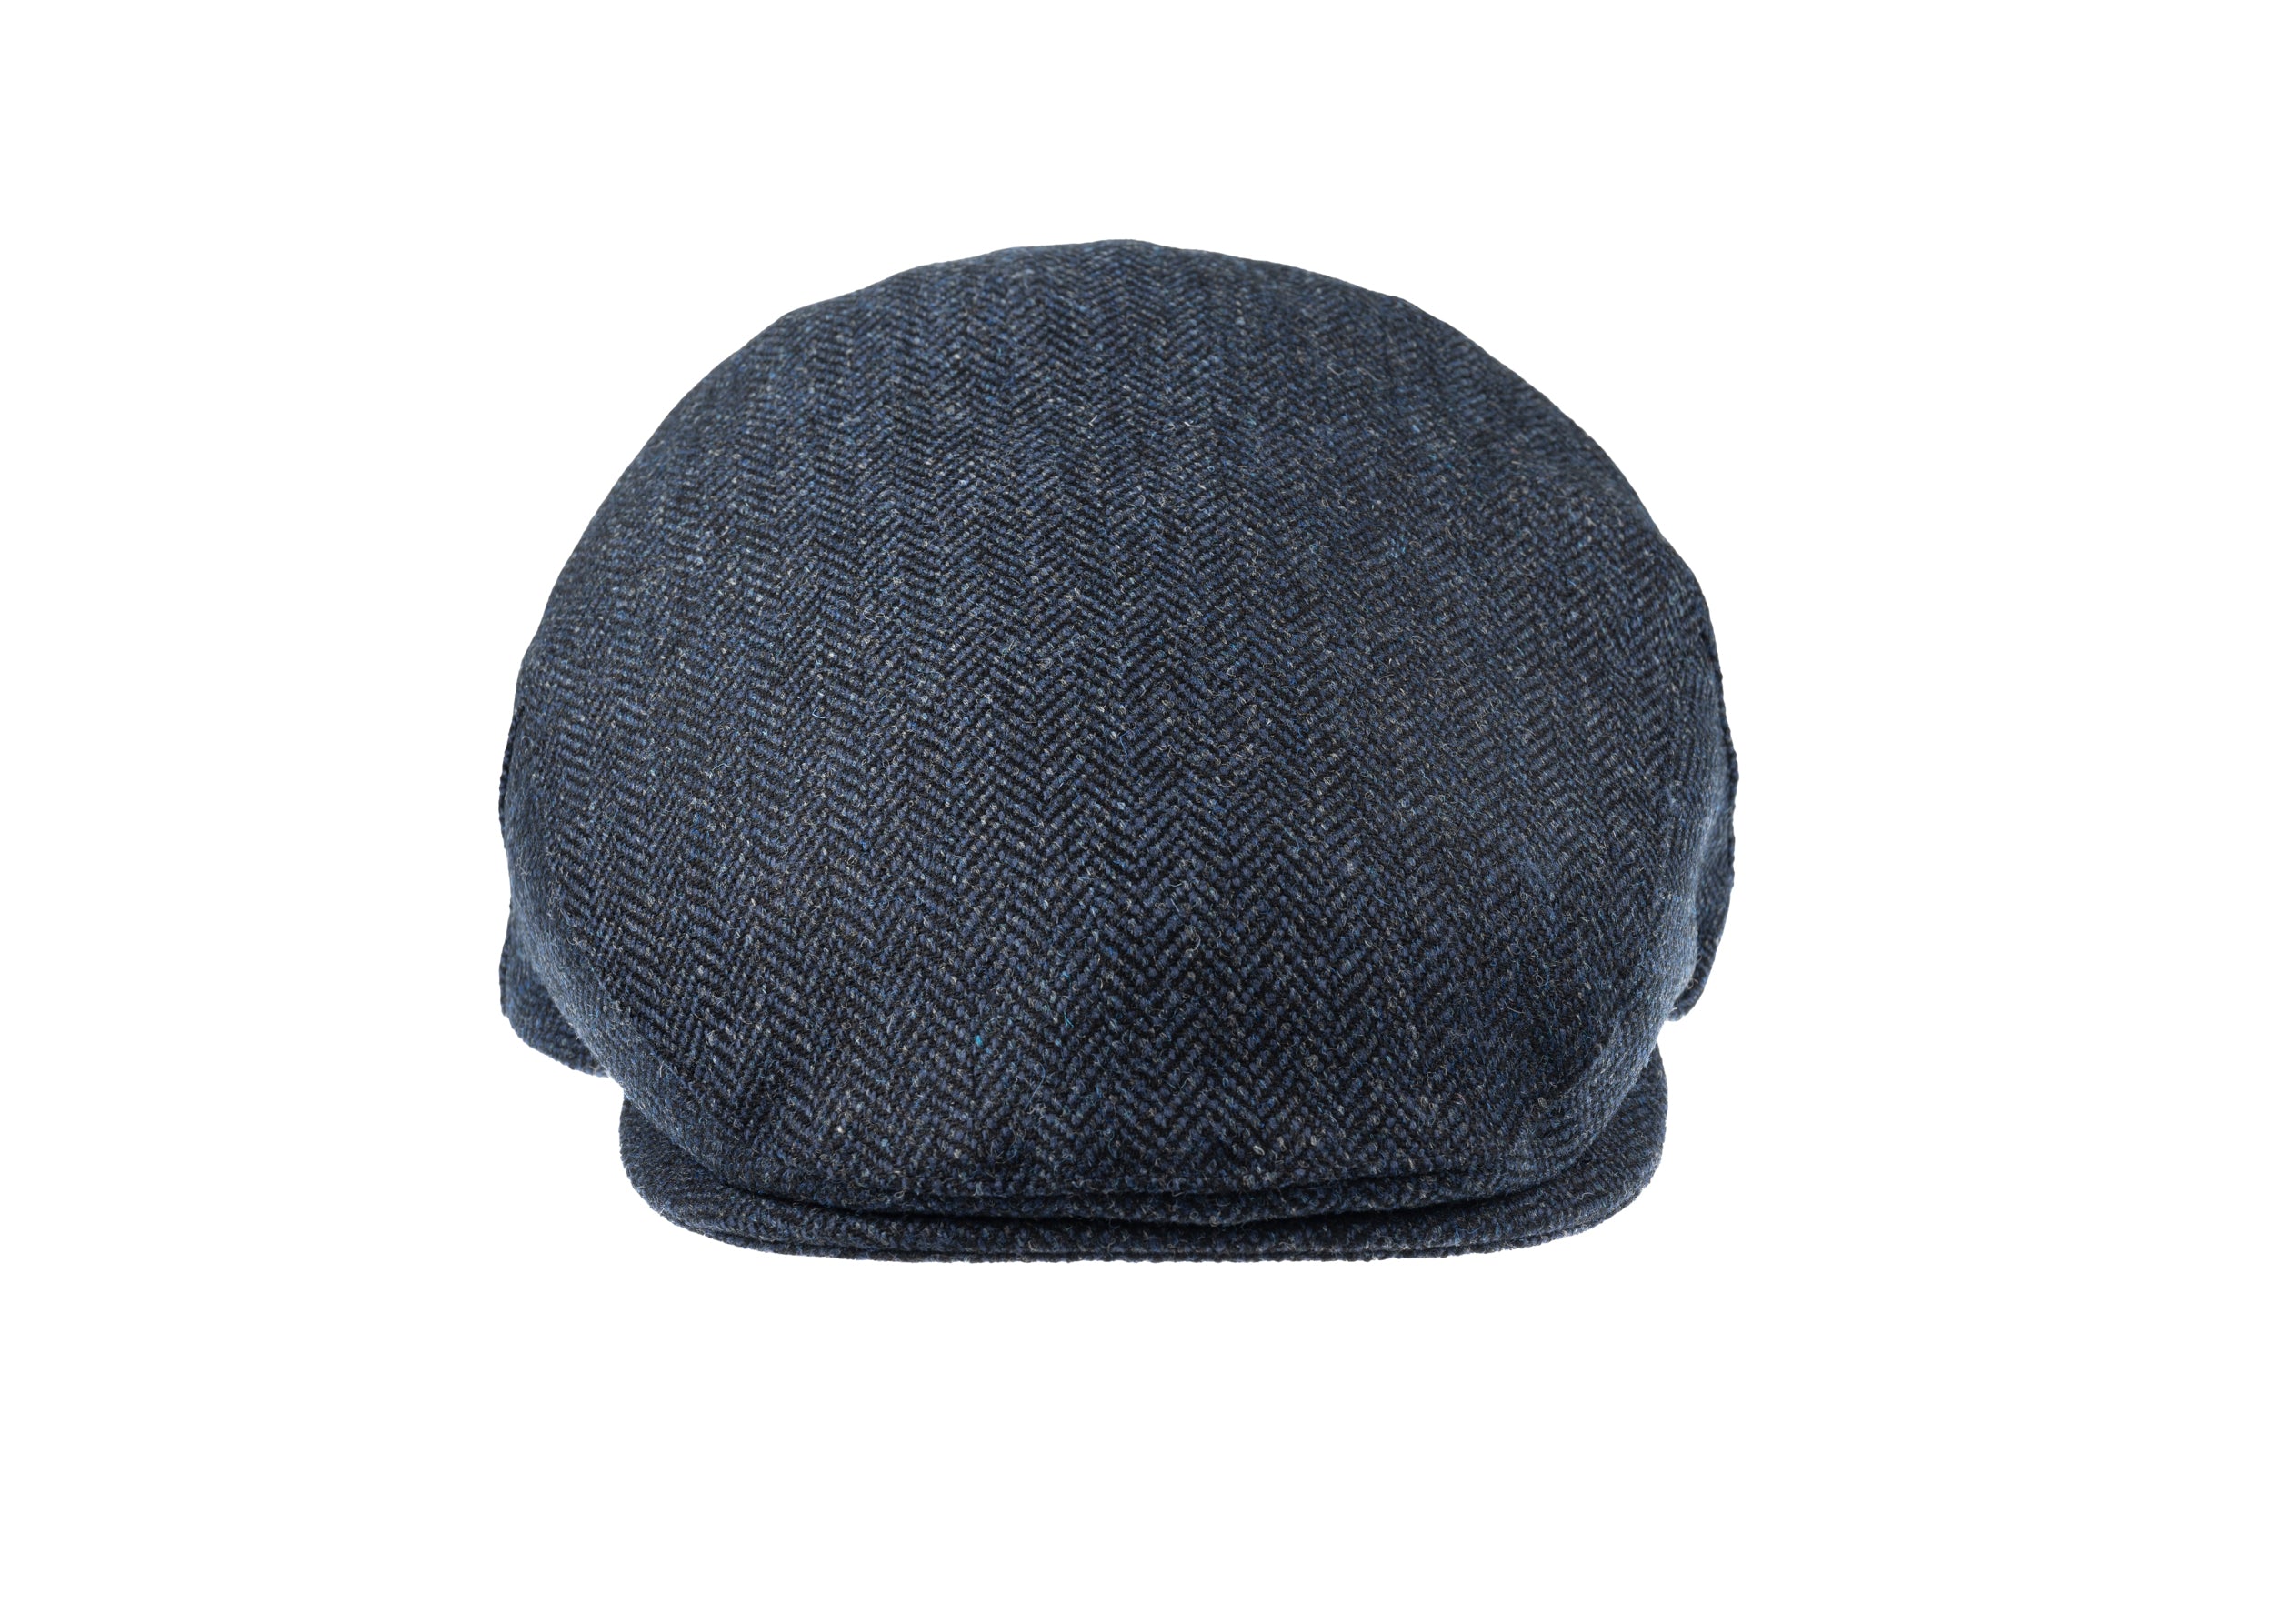 Balmoral Tweed Flat Cap in Z539